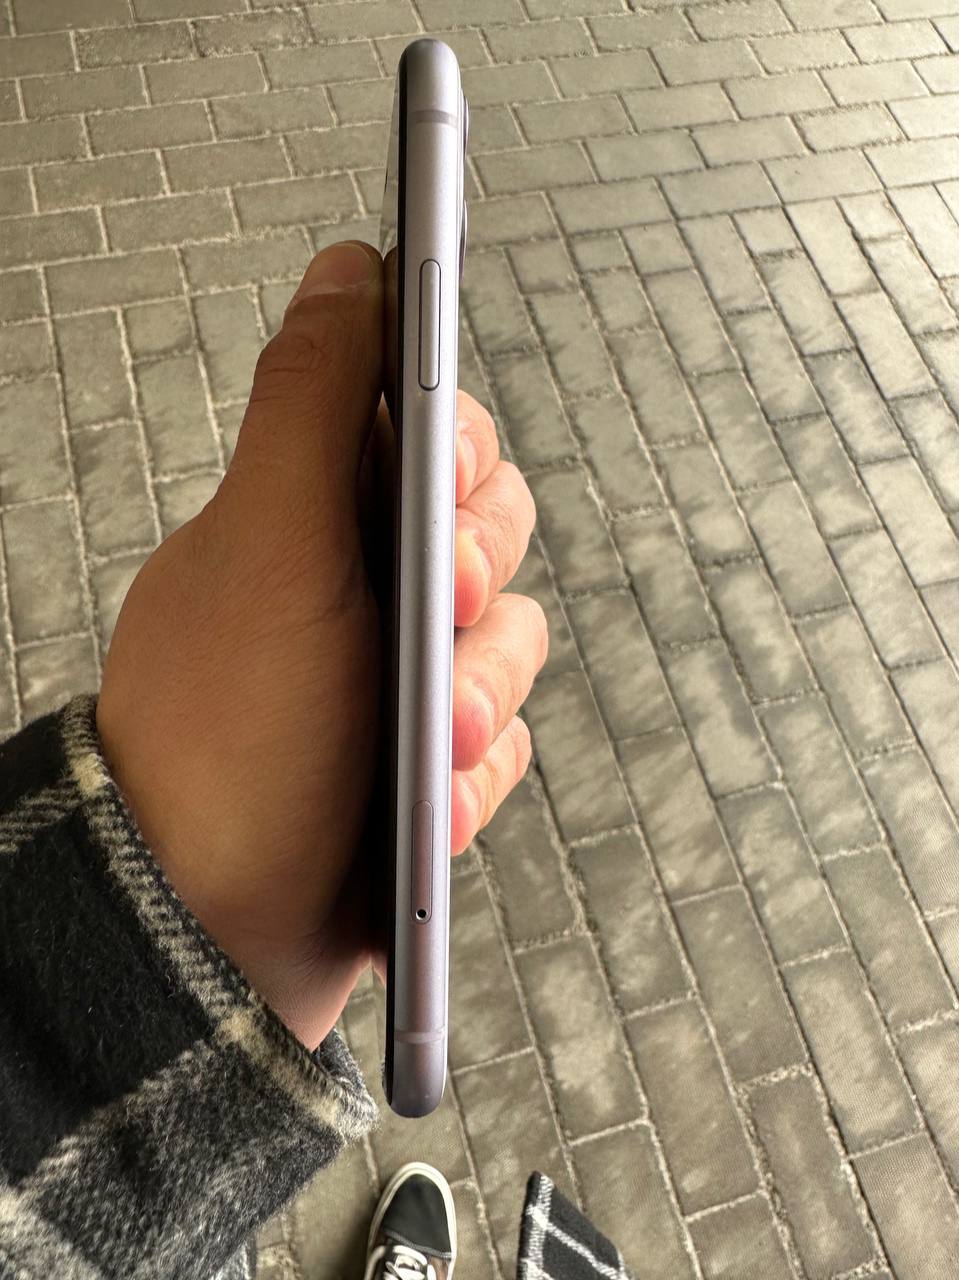 iPhone 11 64gb, Purple